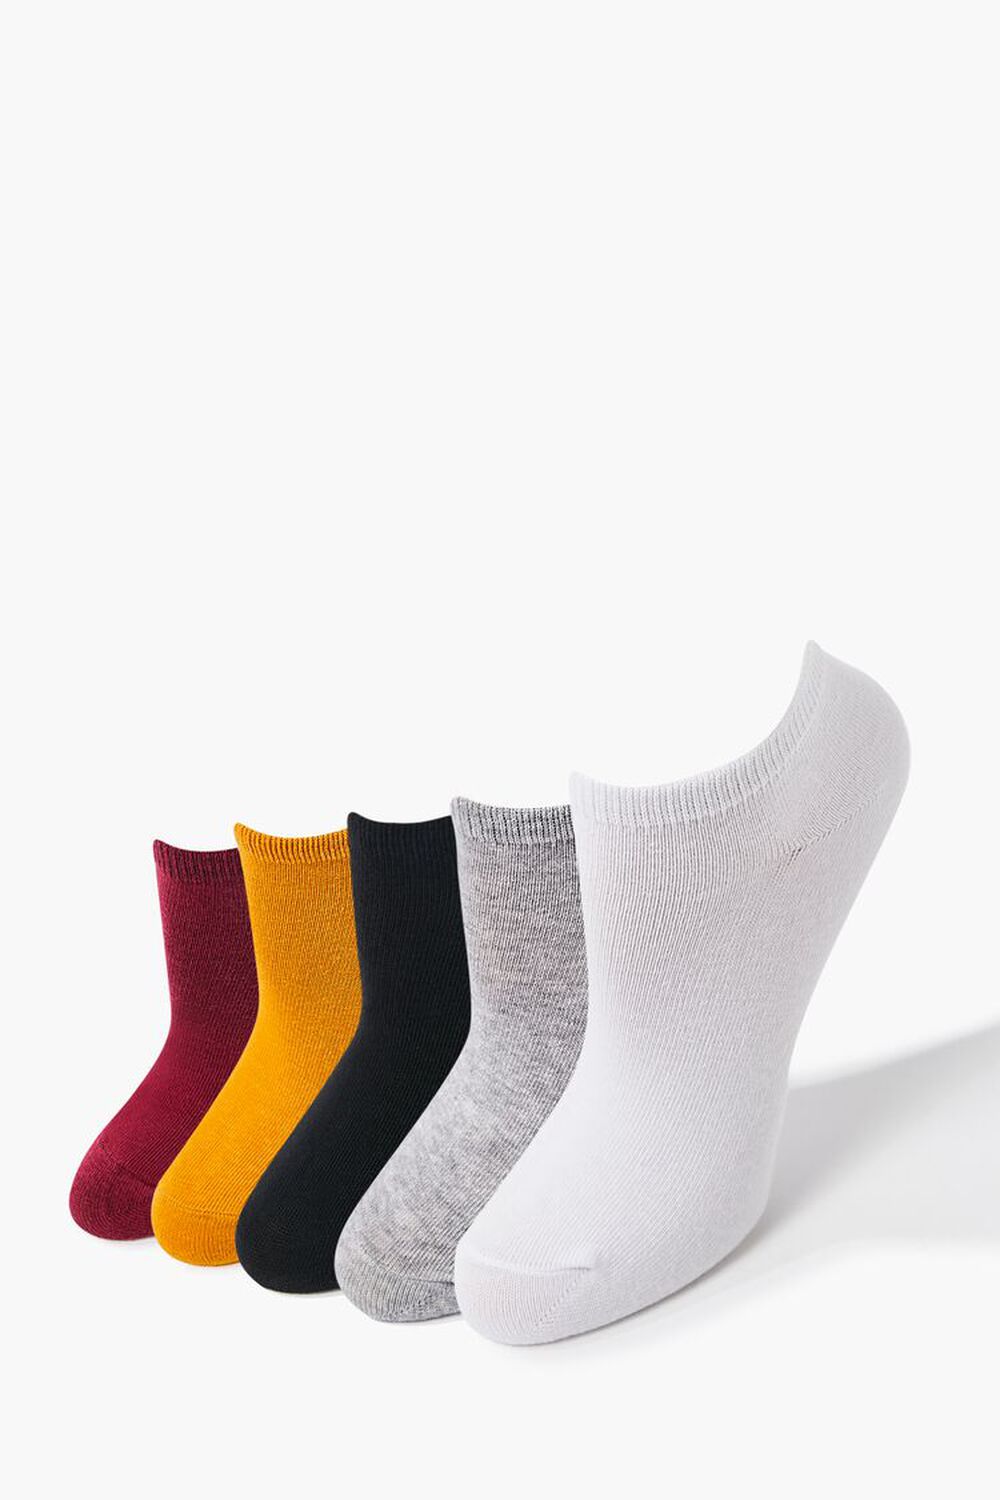 BURGUNDY/MUSTARD Assorted Ankle Socks - 5 Pack, image 1